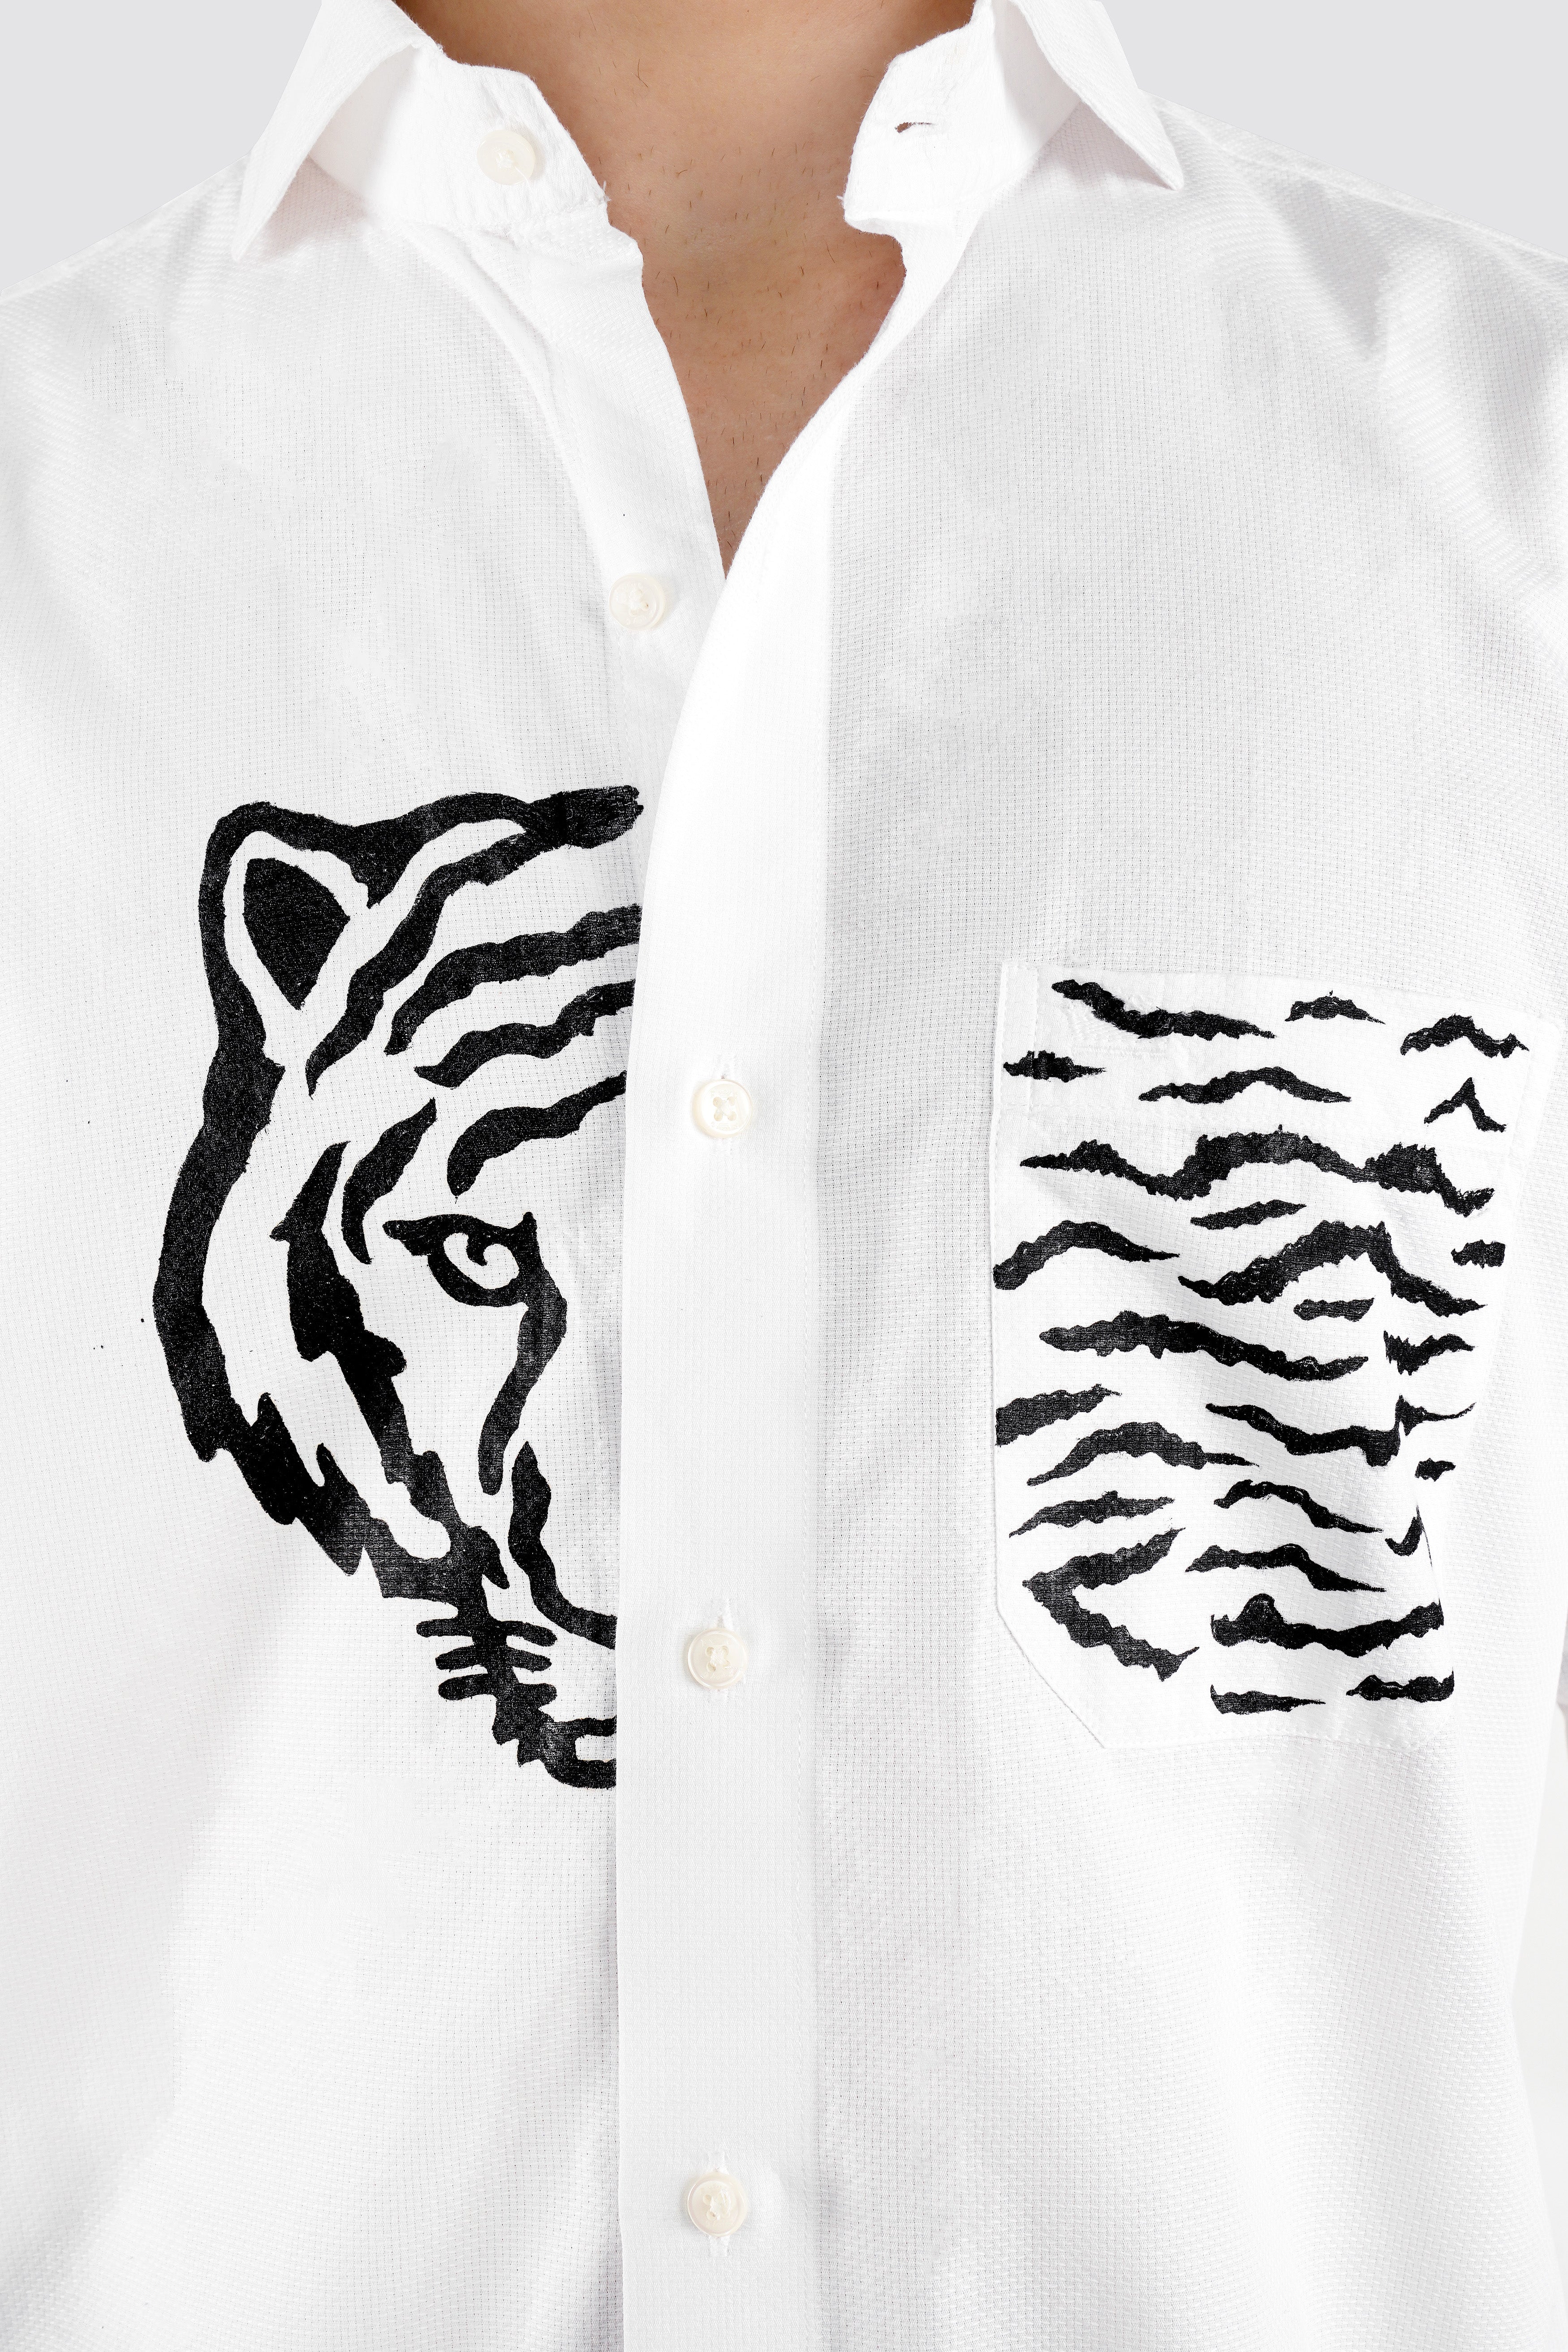 Bright White Tiger Hand Painted Dobby Textured Premium Giza Cotton Designer Shirt